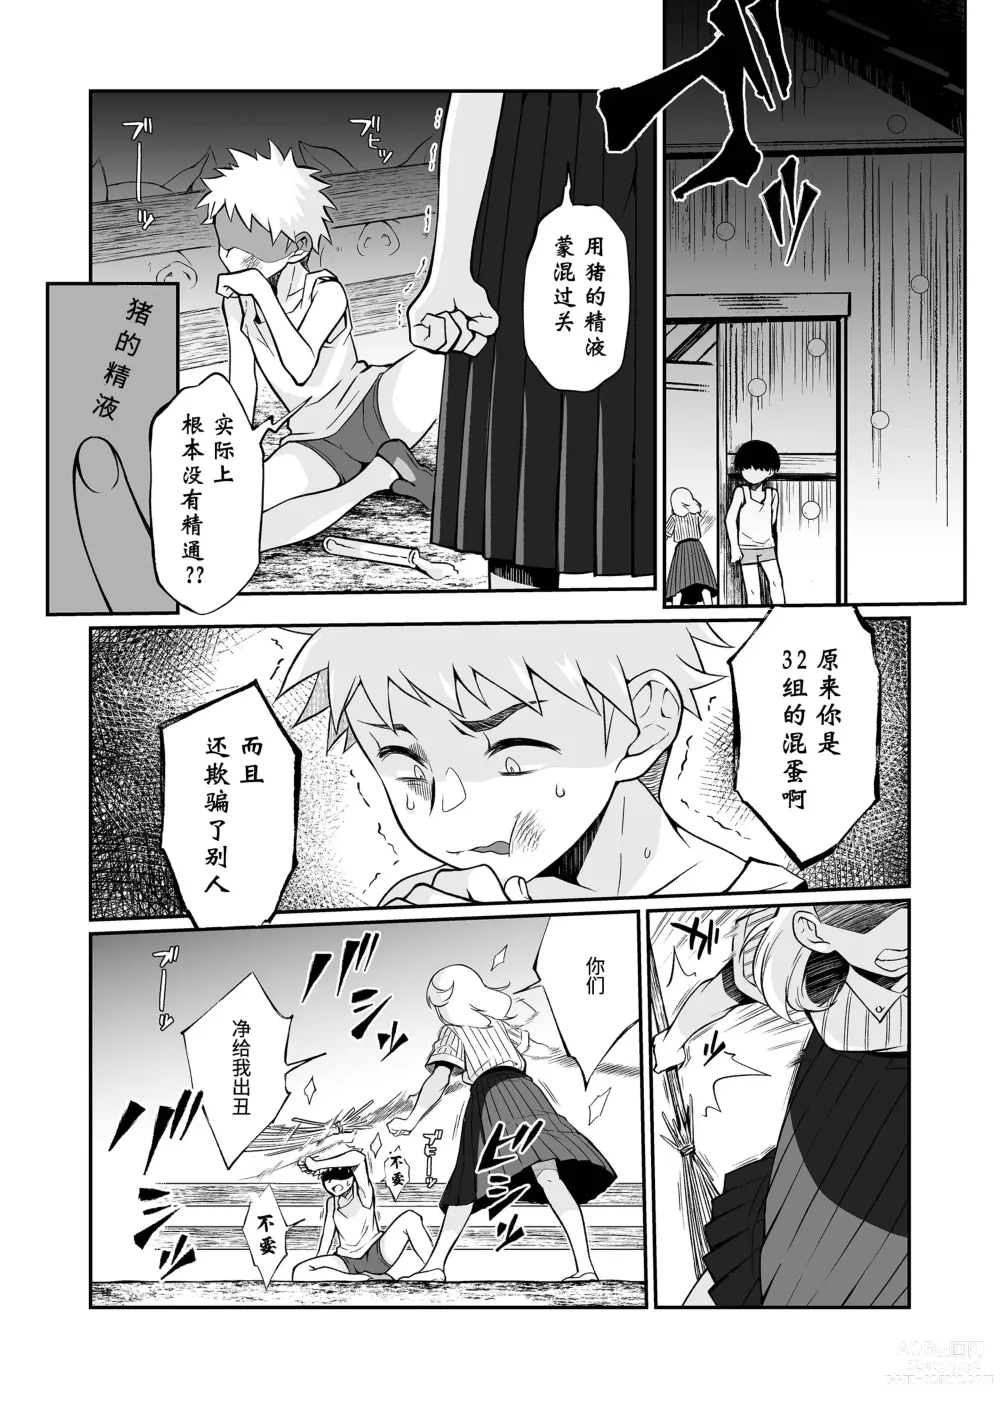 Page 79 of doujinshi 精通反乌托邦